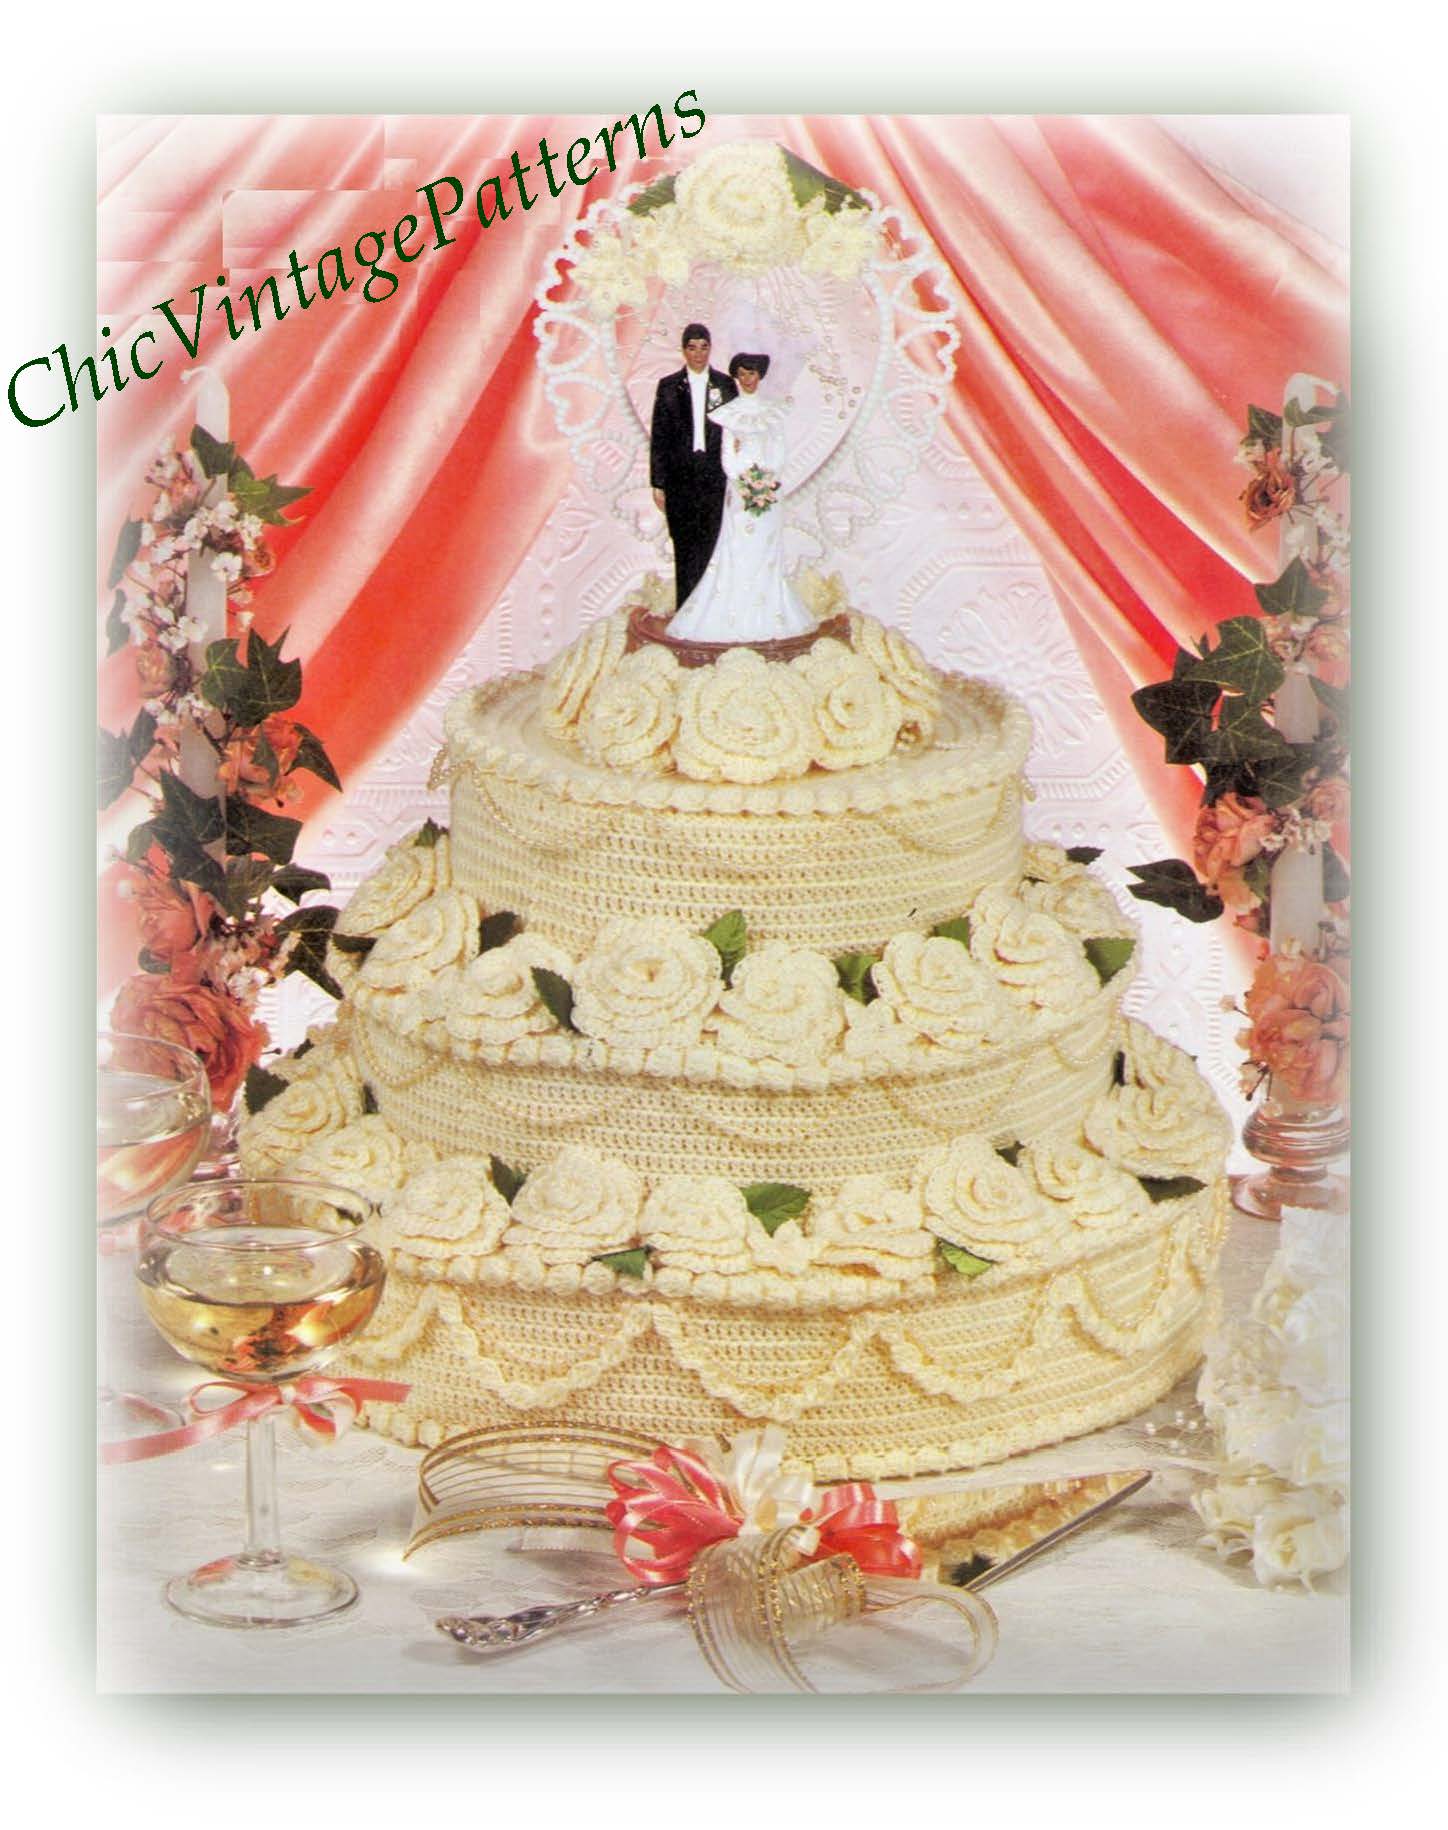 Nautical Chic Wedding Cakes - Cake Geek Magazine